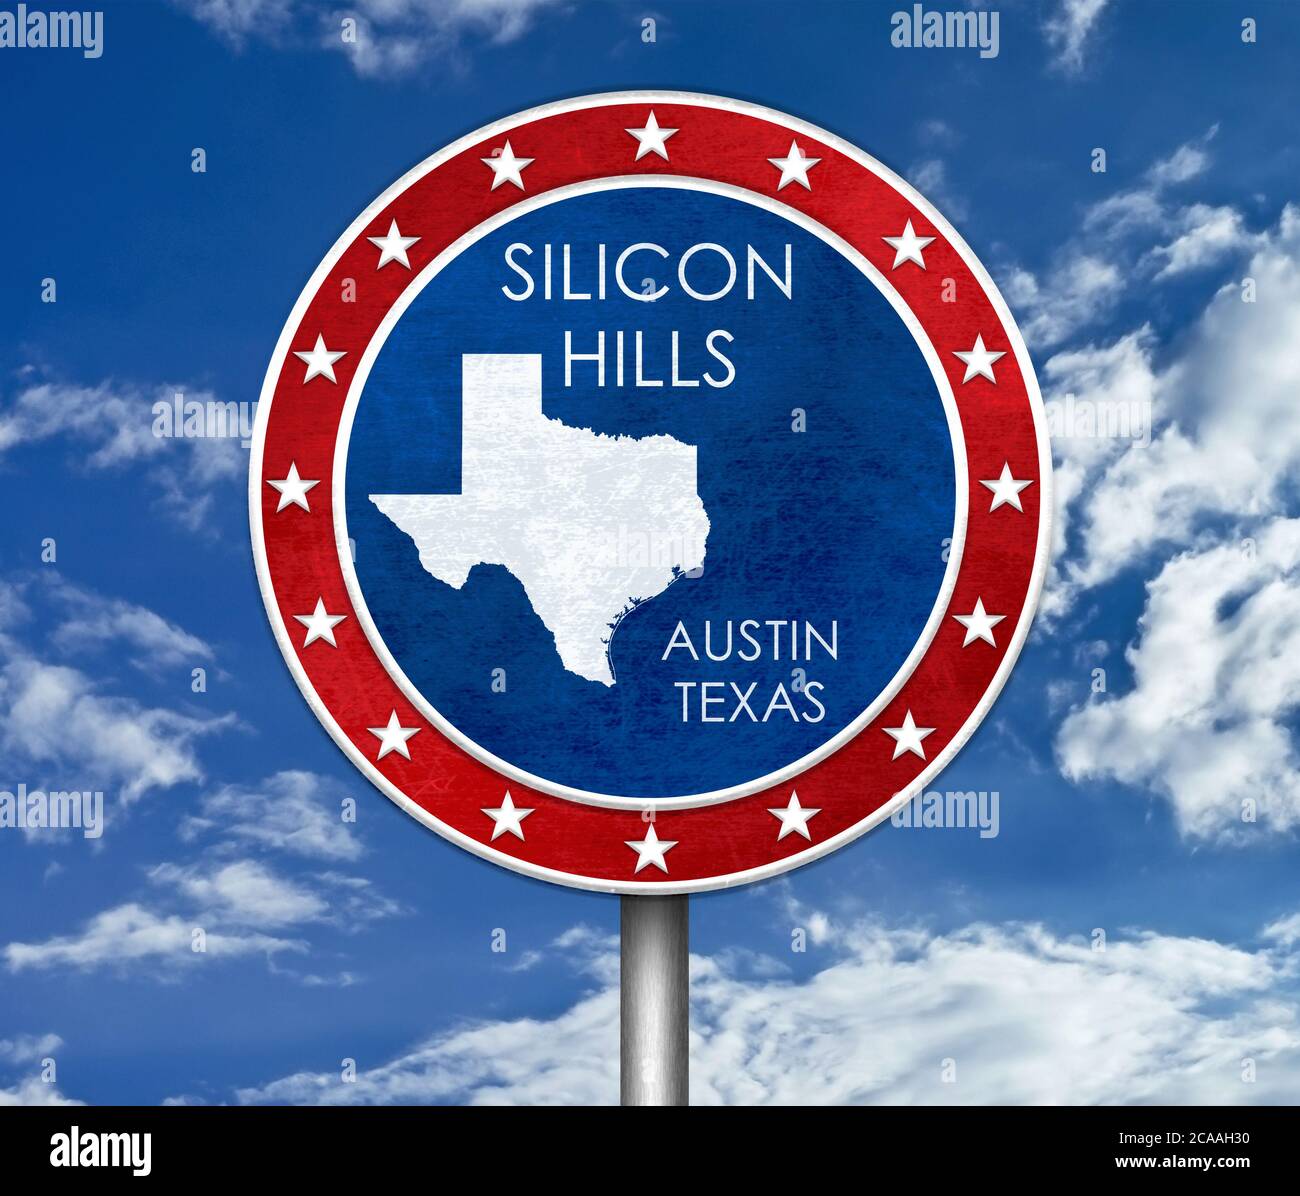 Silicon Hills in Austin Texas - map illustration Stock Photo